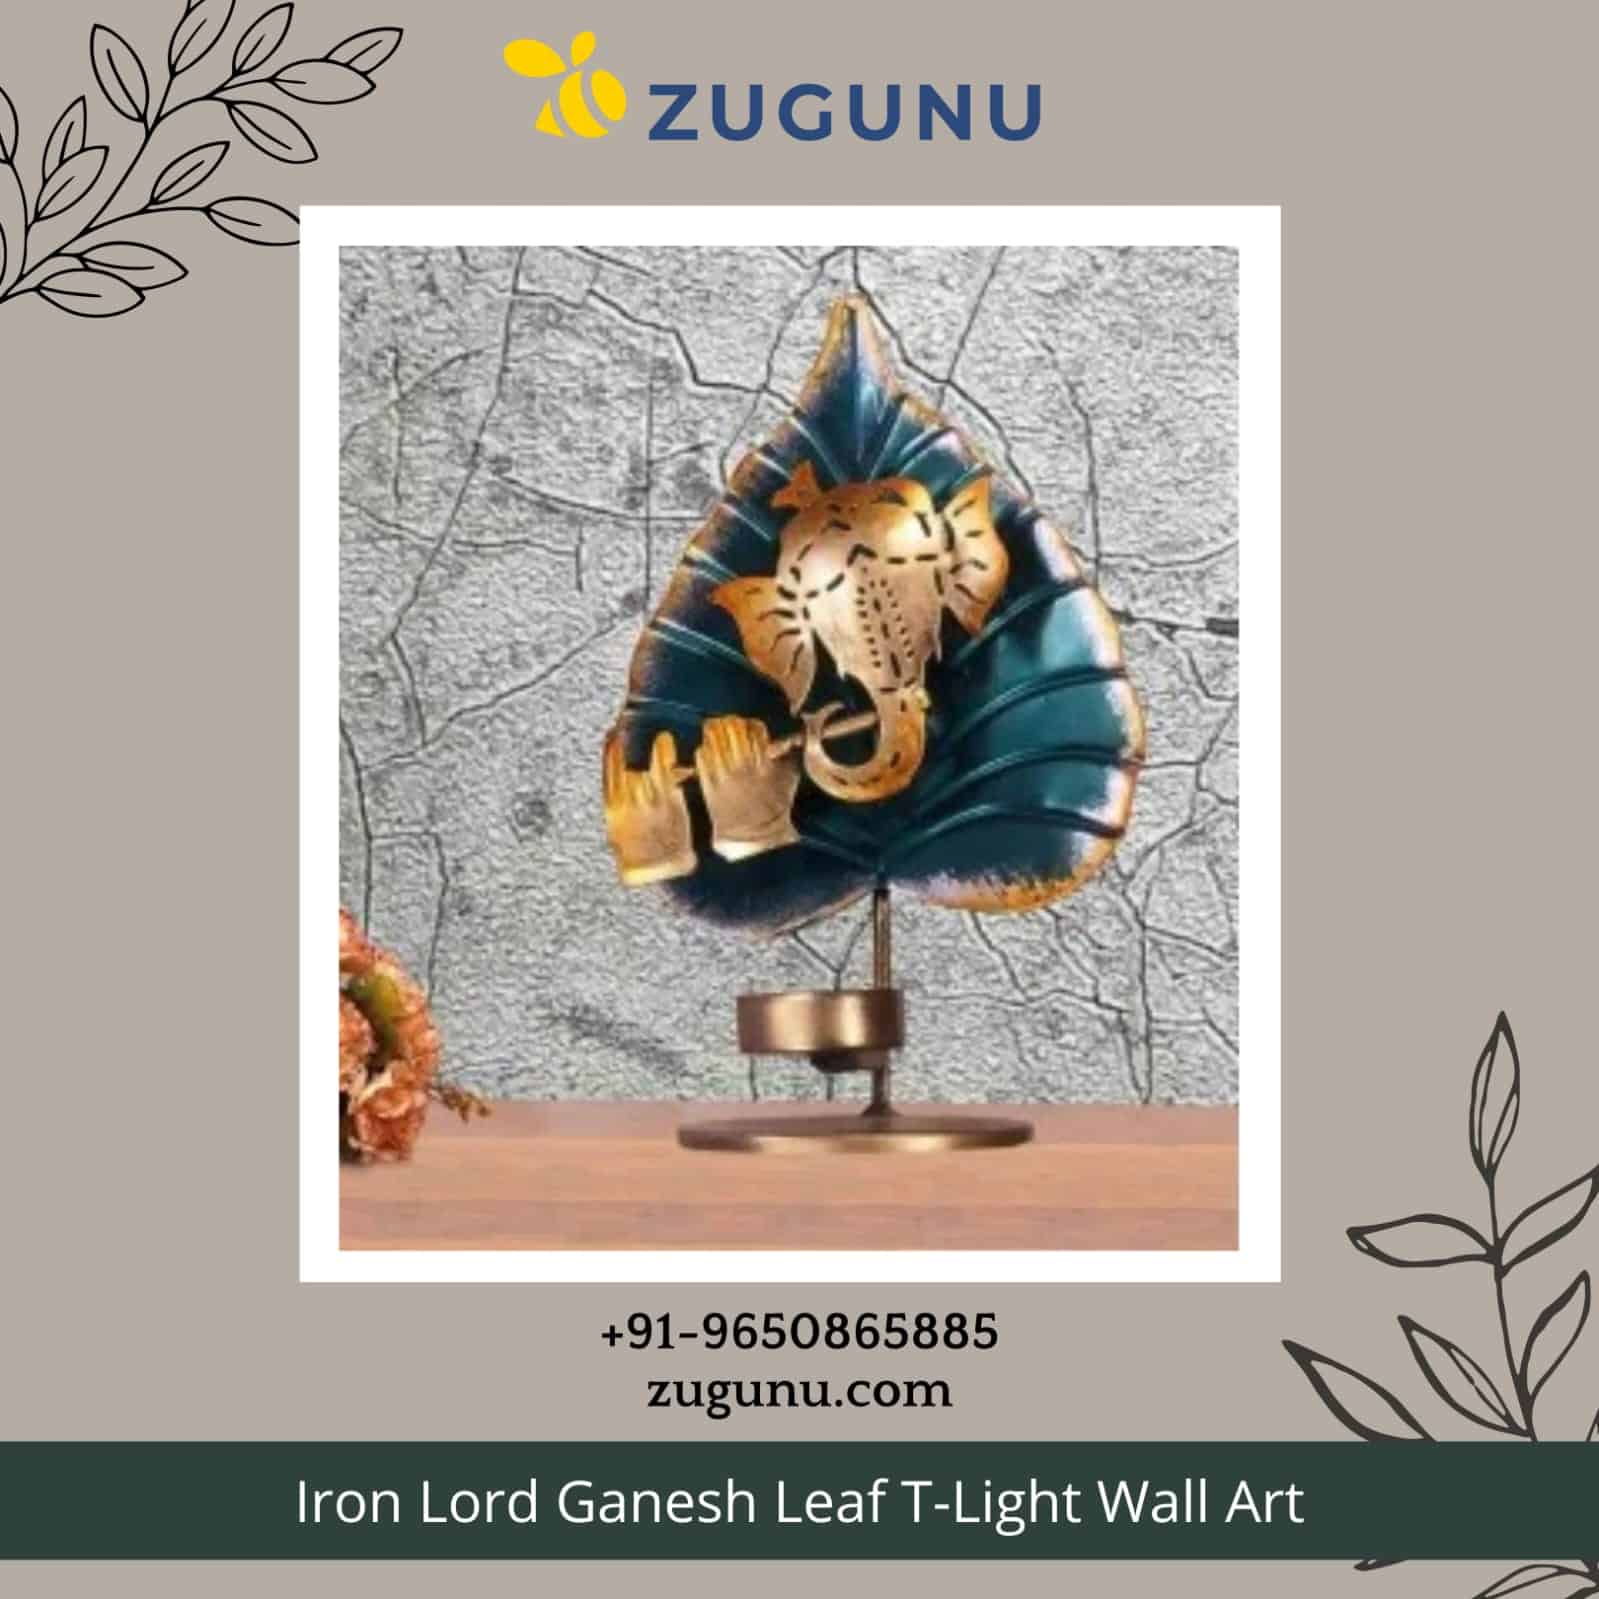 Wall Art Iron Lord Ganesh Leaf T Light Zugunu